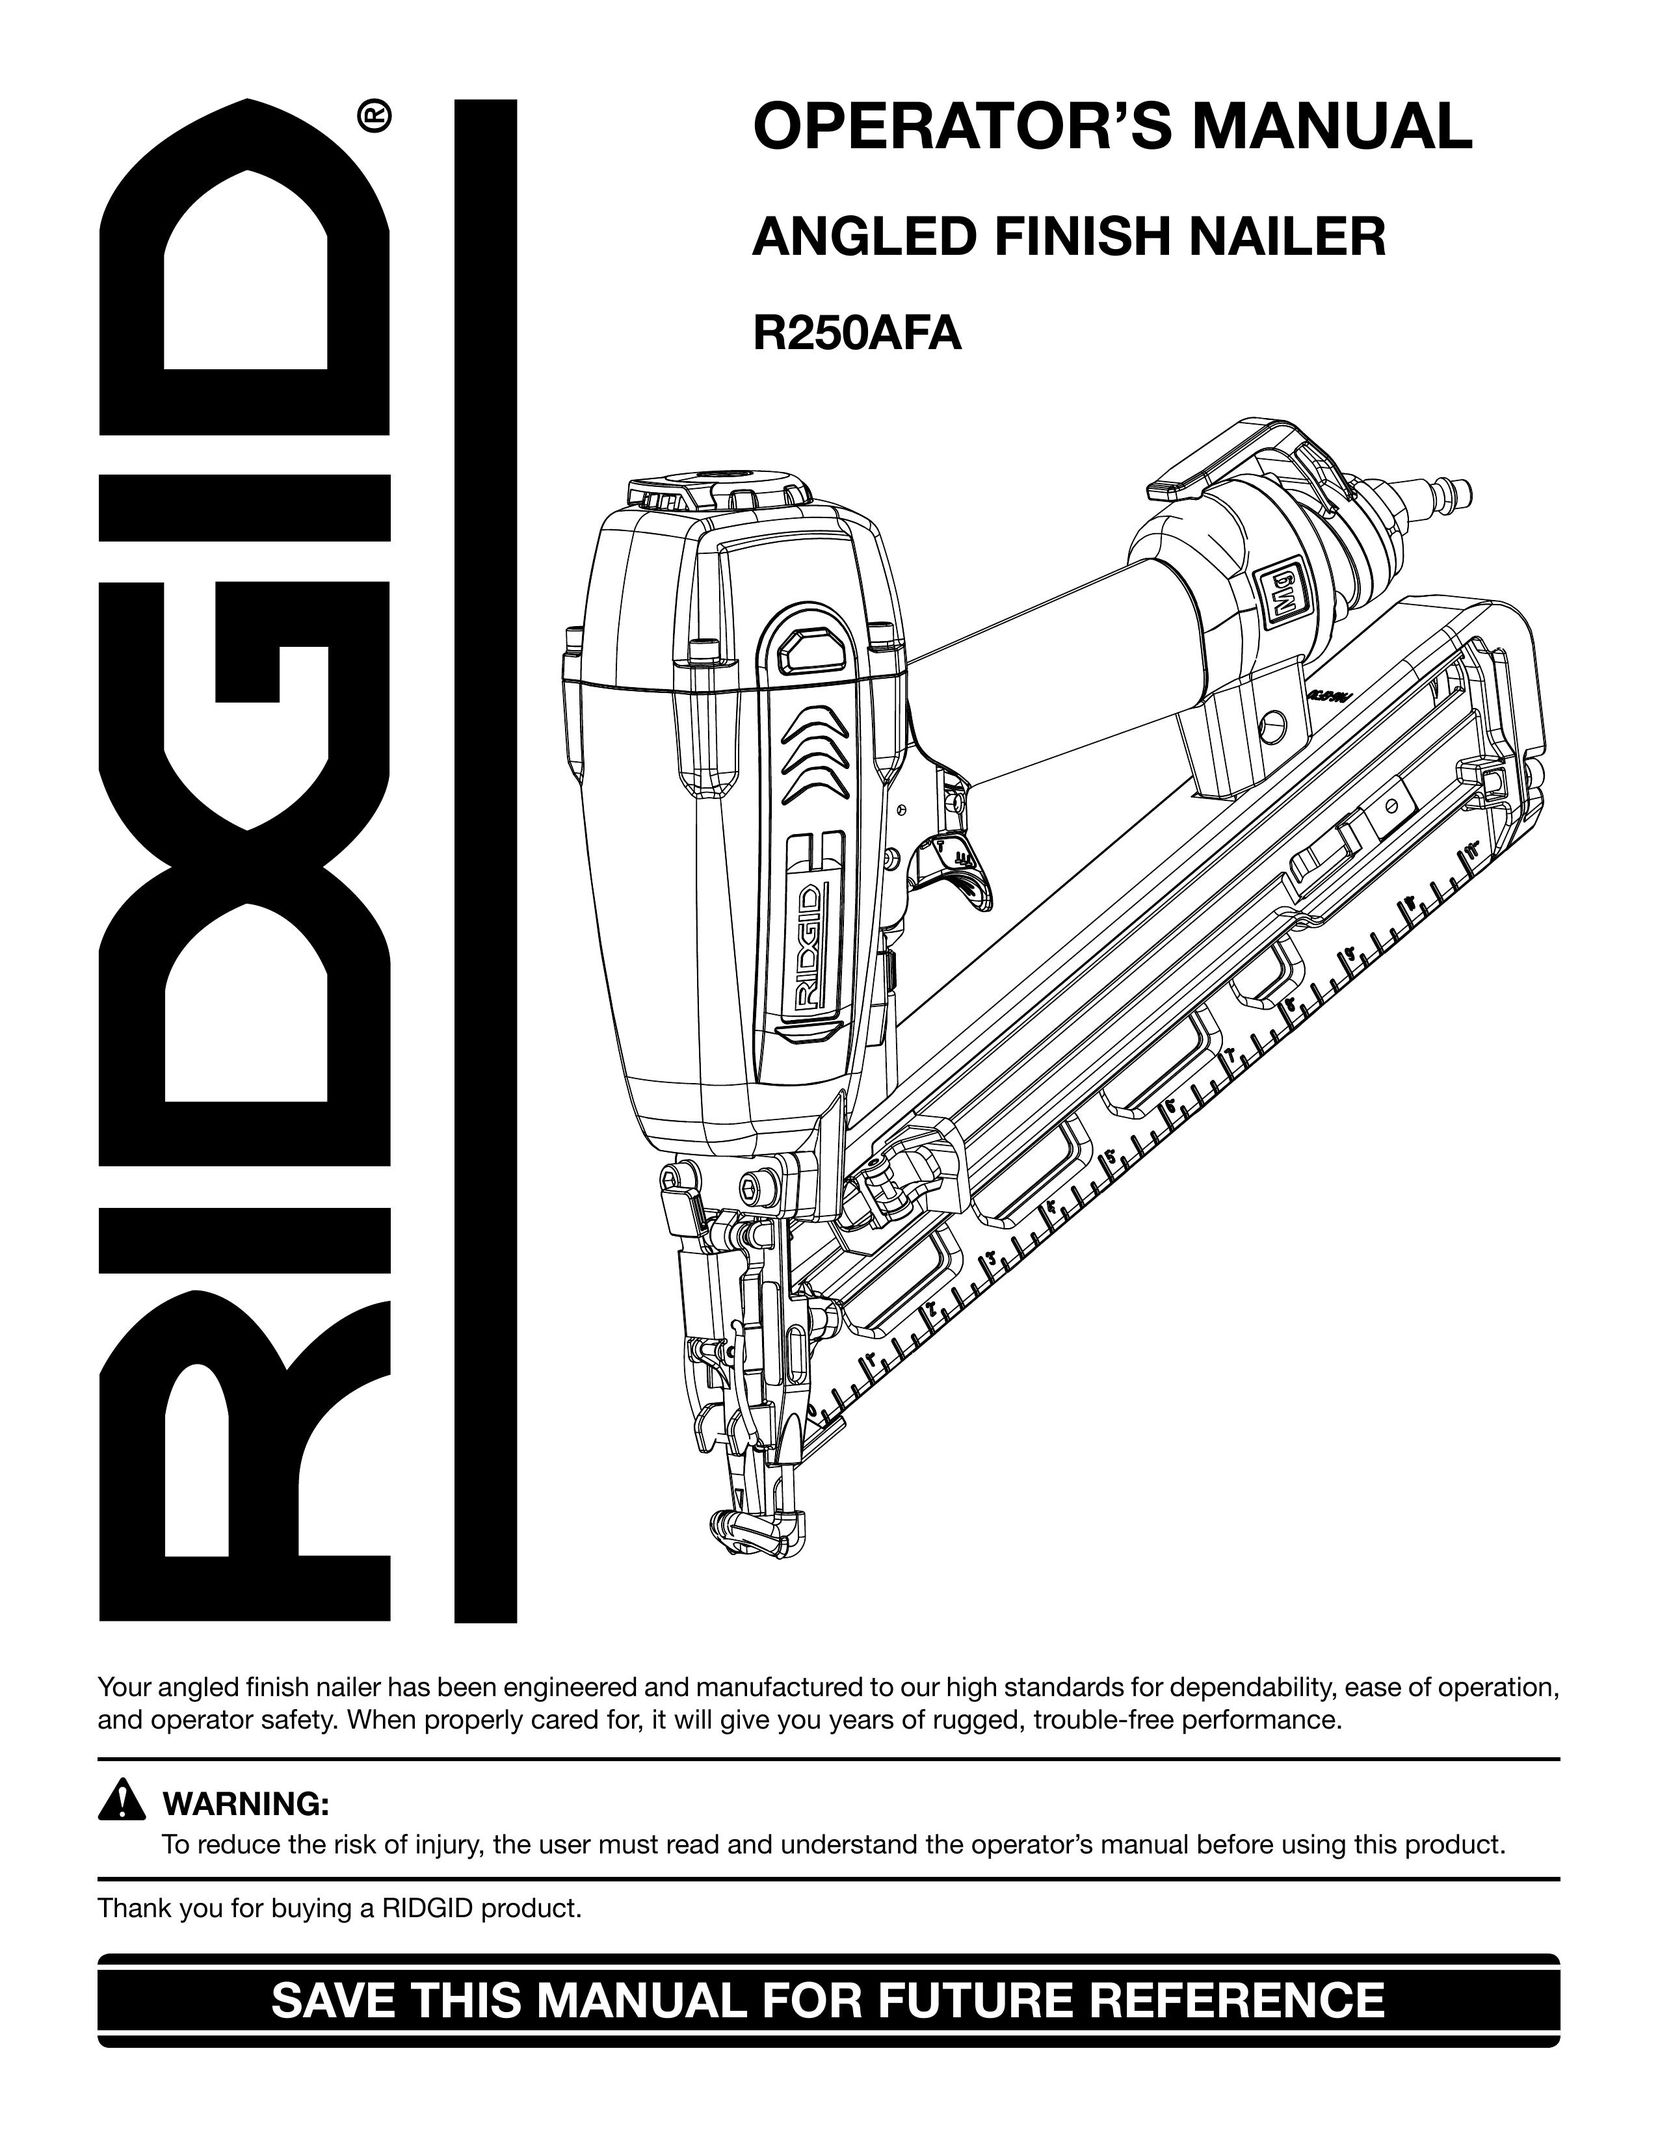 RIDGID R250AFA Nail Gun User Manual